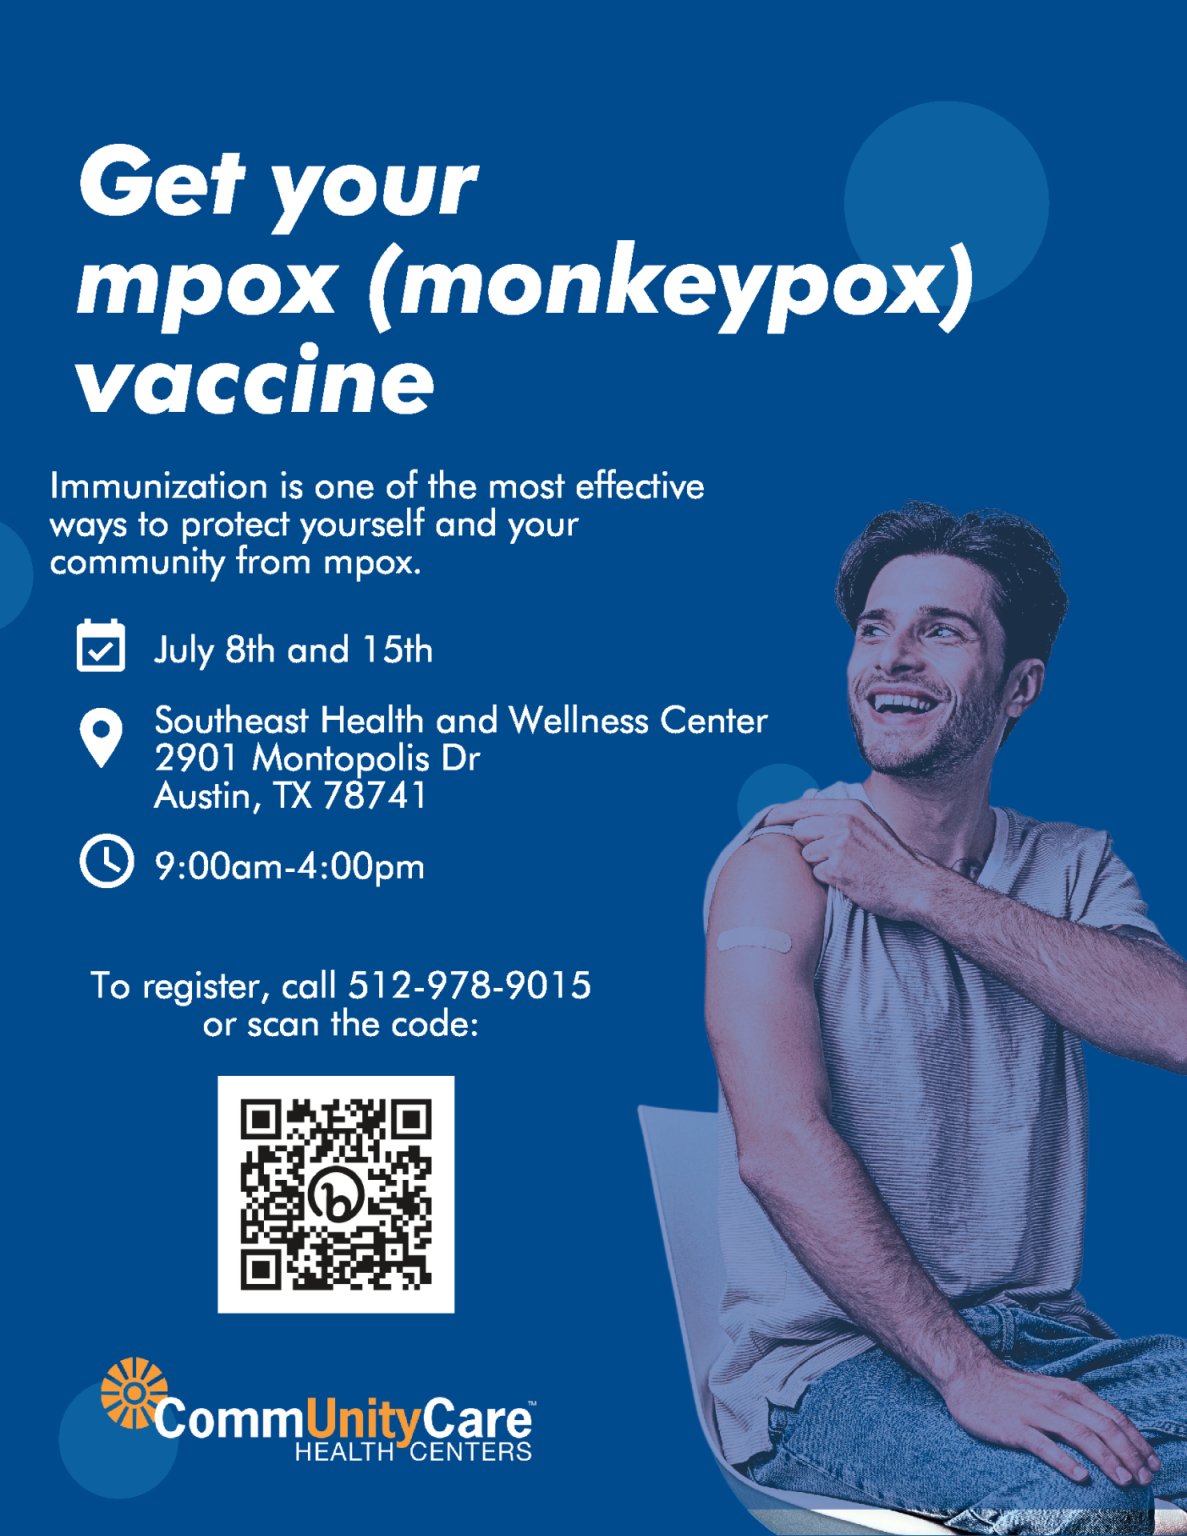 CommUnityCare Hosting Mpox (Monkeypox) Vaccine Event Community Care